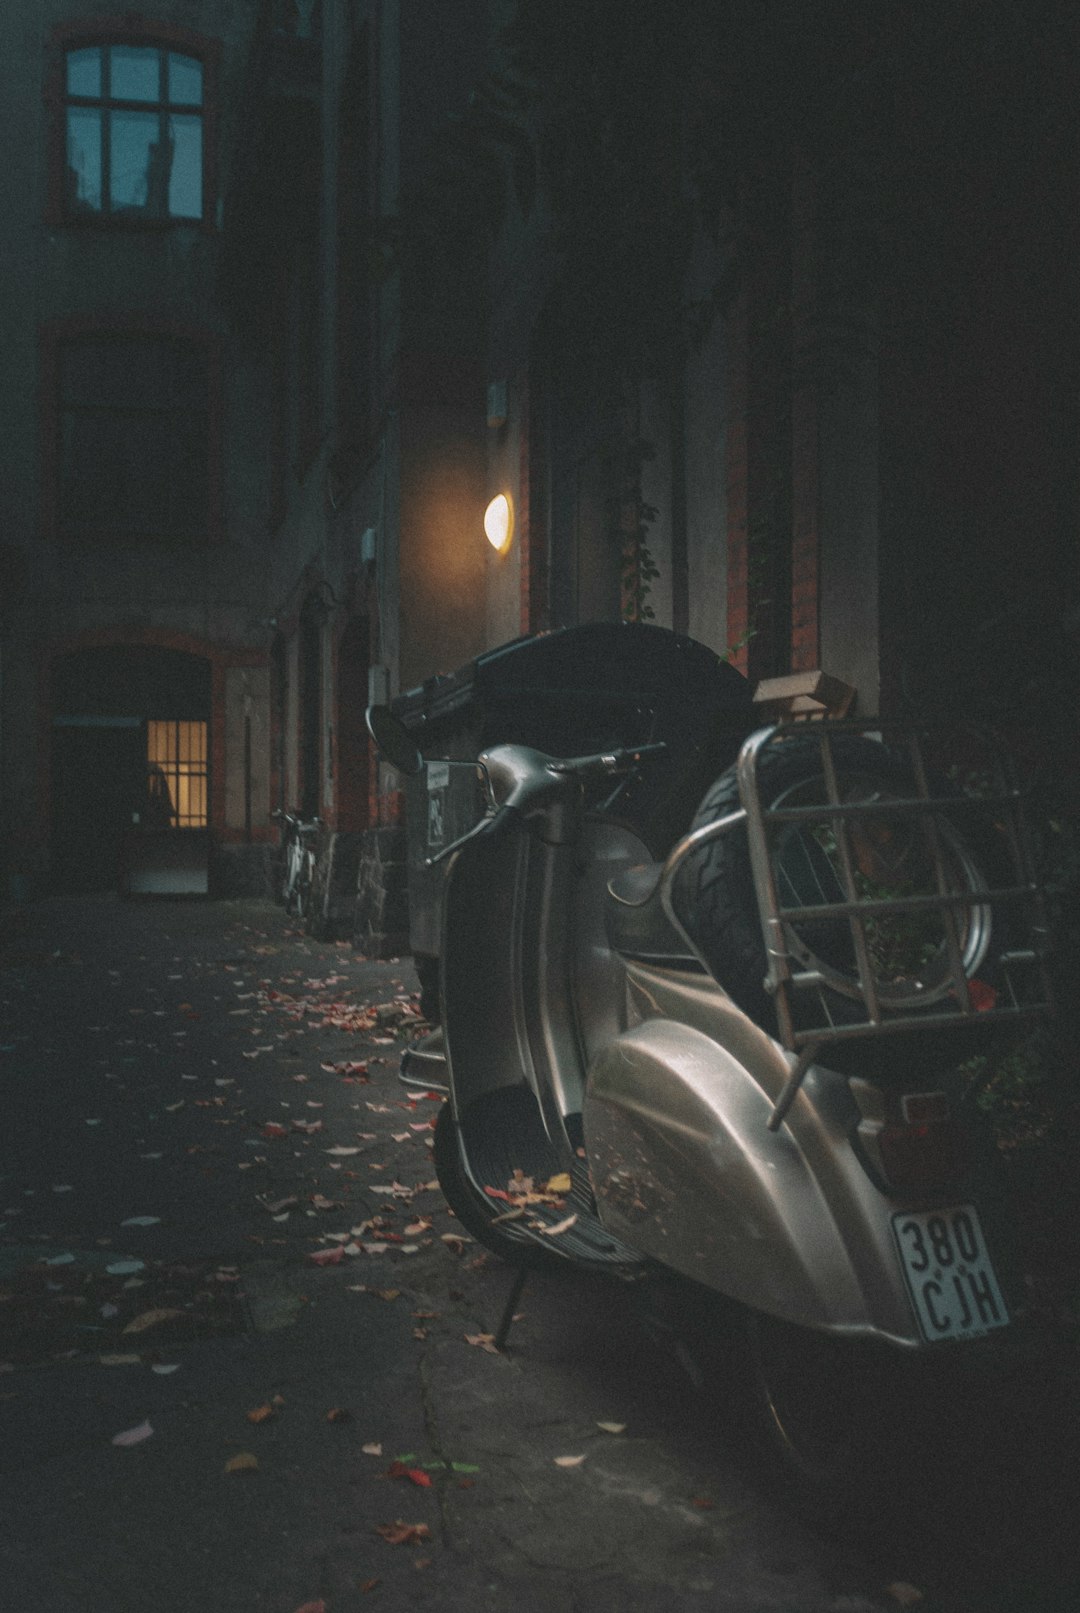 black motorcycle parked on sidewalk during night time